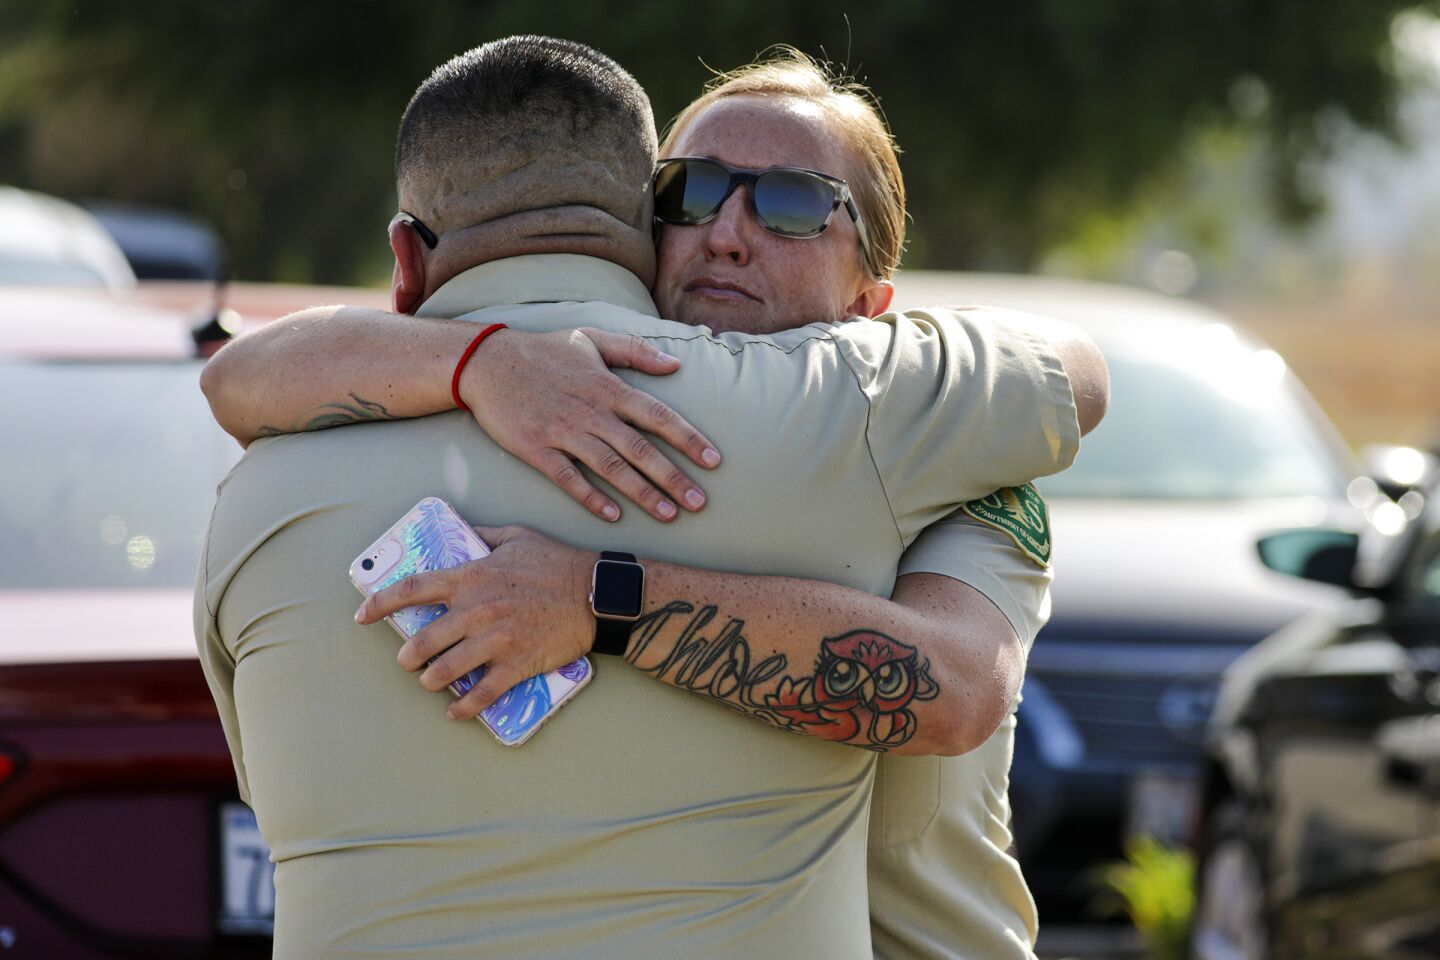 San Bernardino National Forest officer Mark Munoz Jr., left, and Samantha Gardner embrace